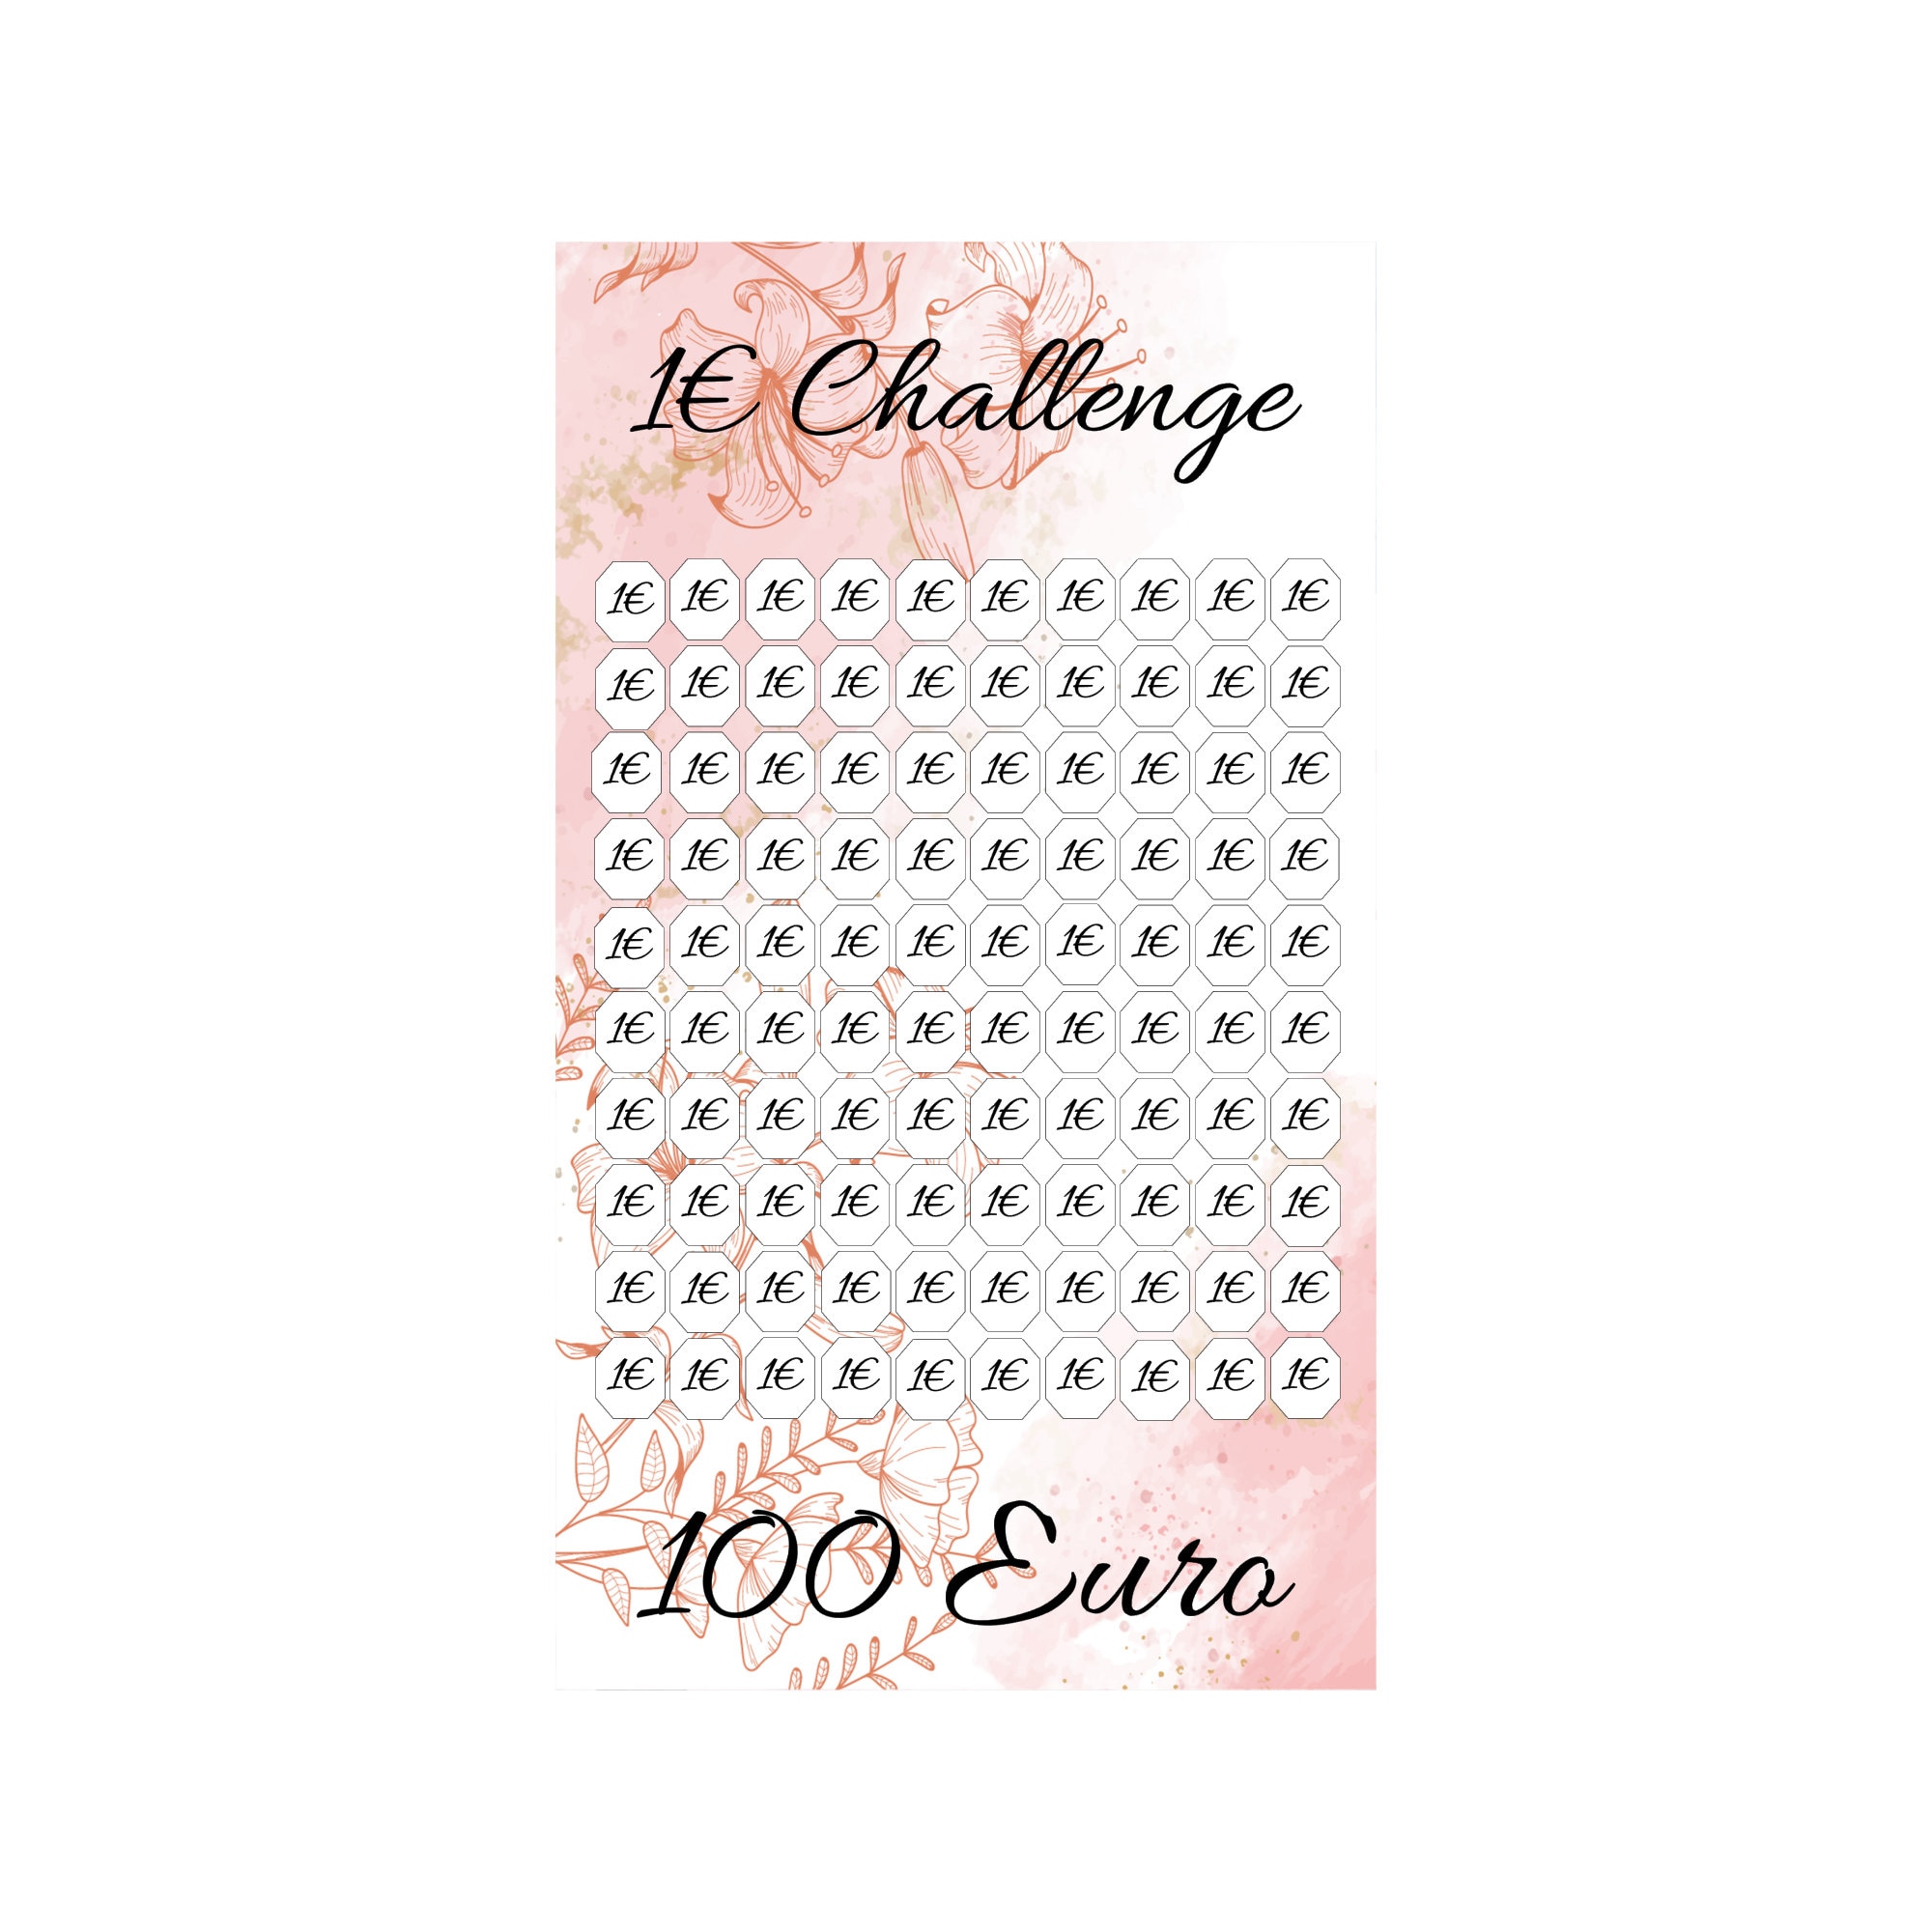 1 euro challenge budget sheet